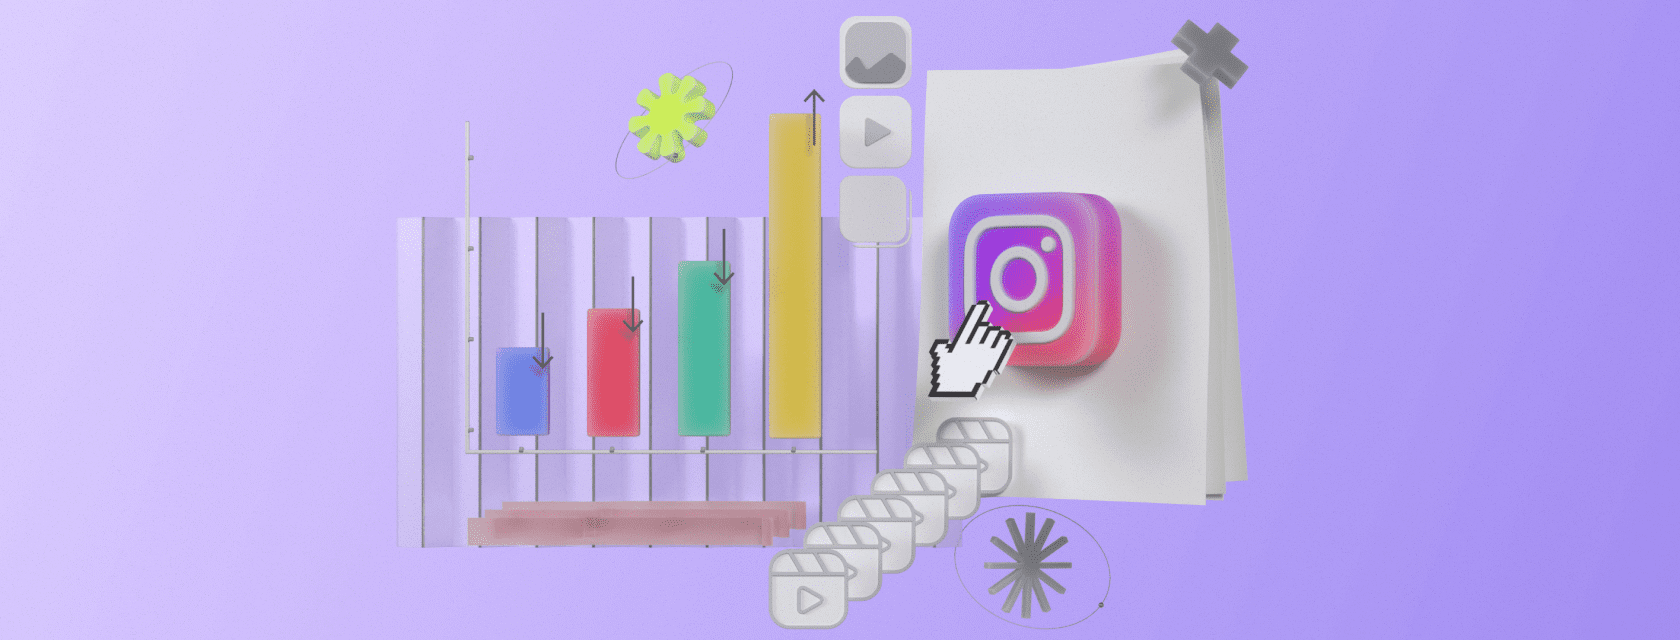 Instagram Story Ideas for Business: Best Friends List for Marketing